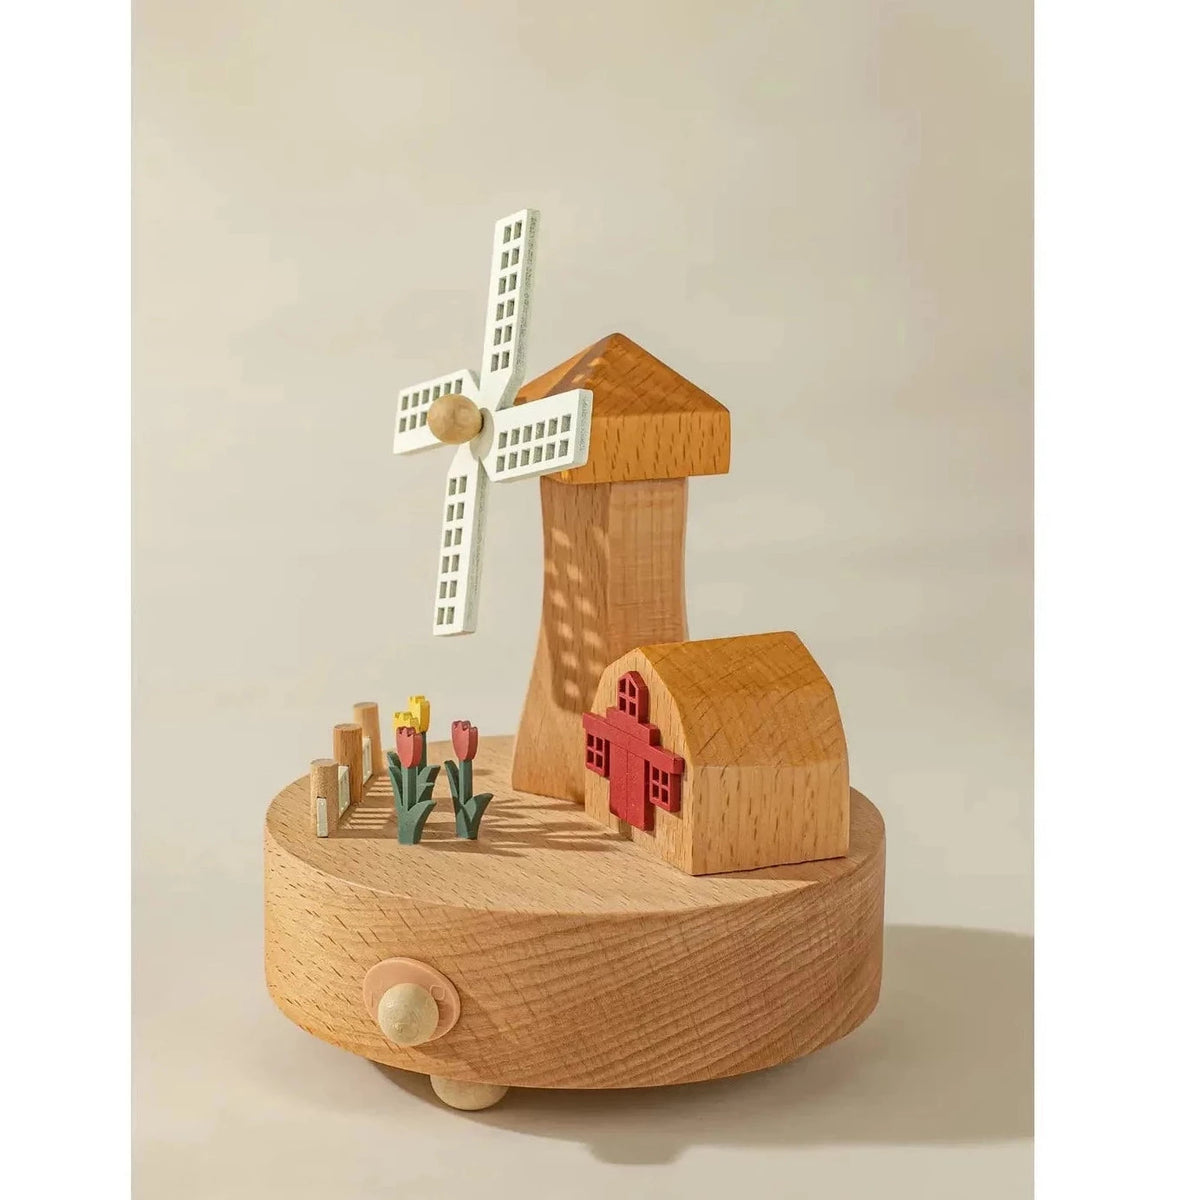 The Windmill Music Box